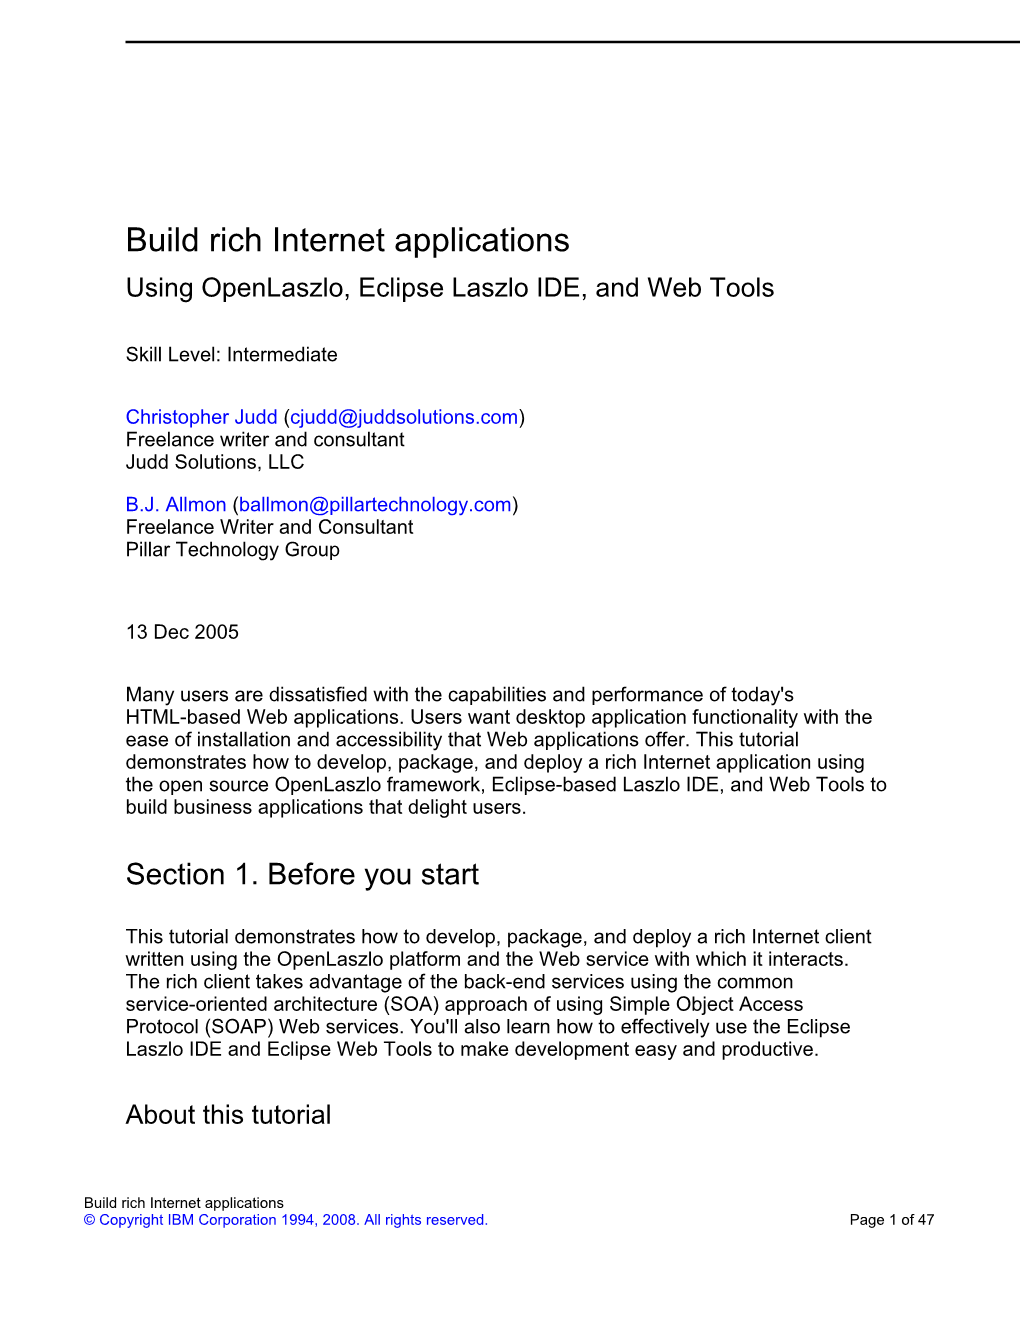 Build Rich Internet Applications Using Openlaszlo, Eclipse Laszlo IDE, and Web Tools